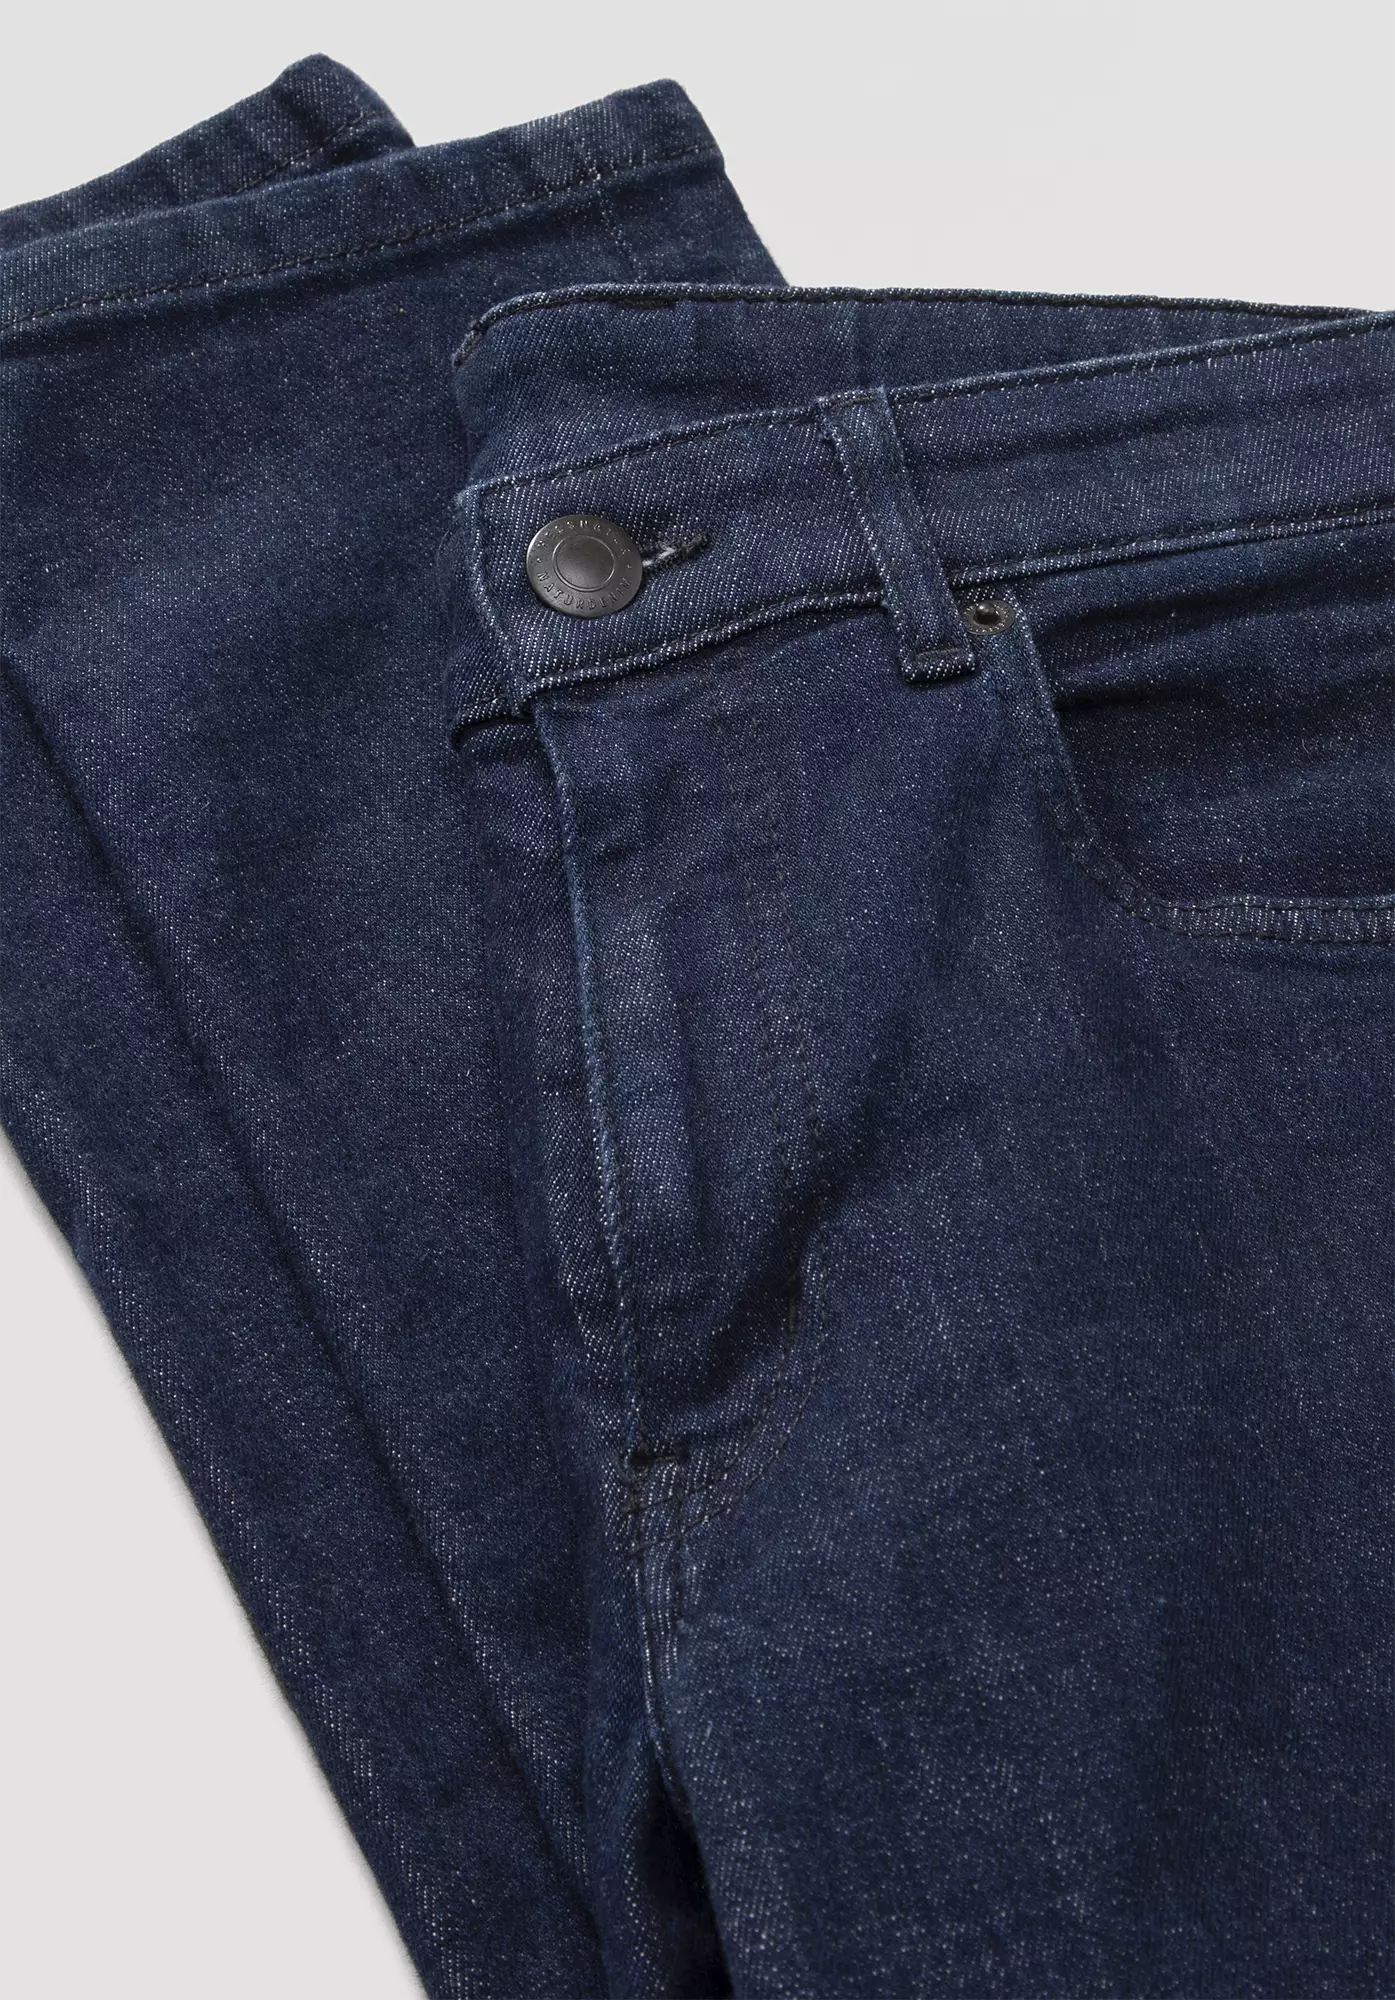 JASPER Slim jeans made from organic denim - 5